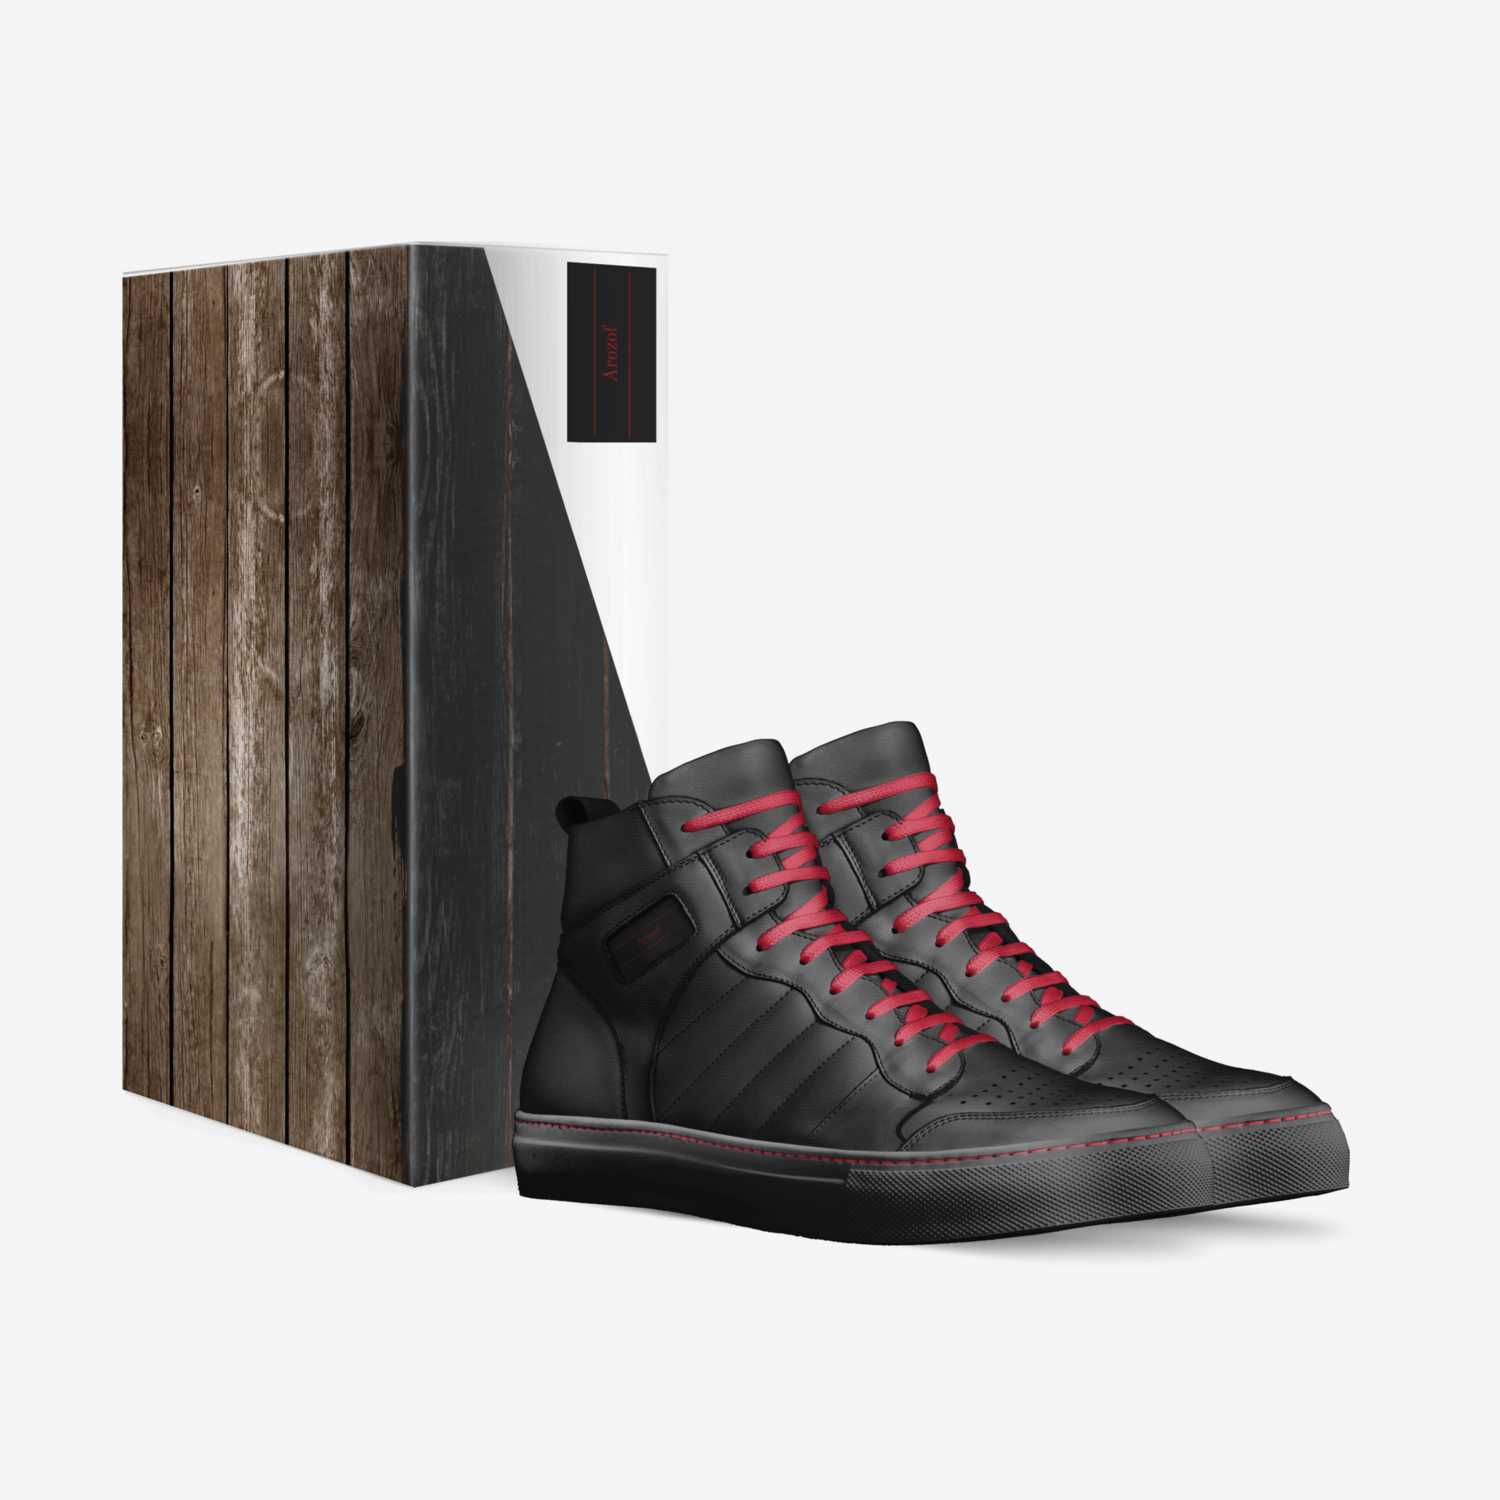 Arozof custom made in Italy shoes by Szymon Arozof | Box view